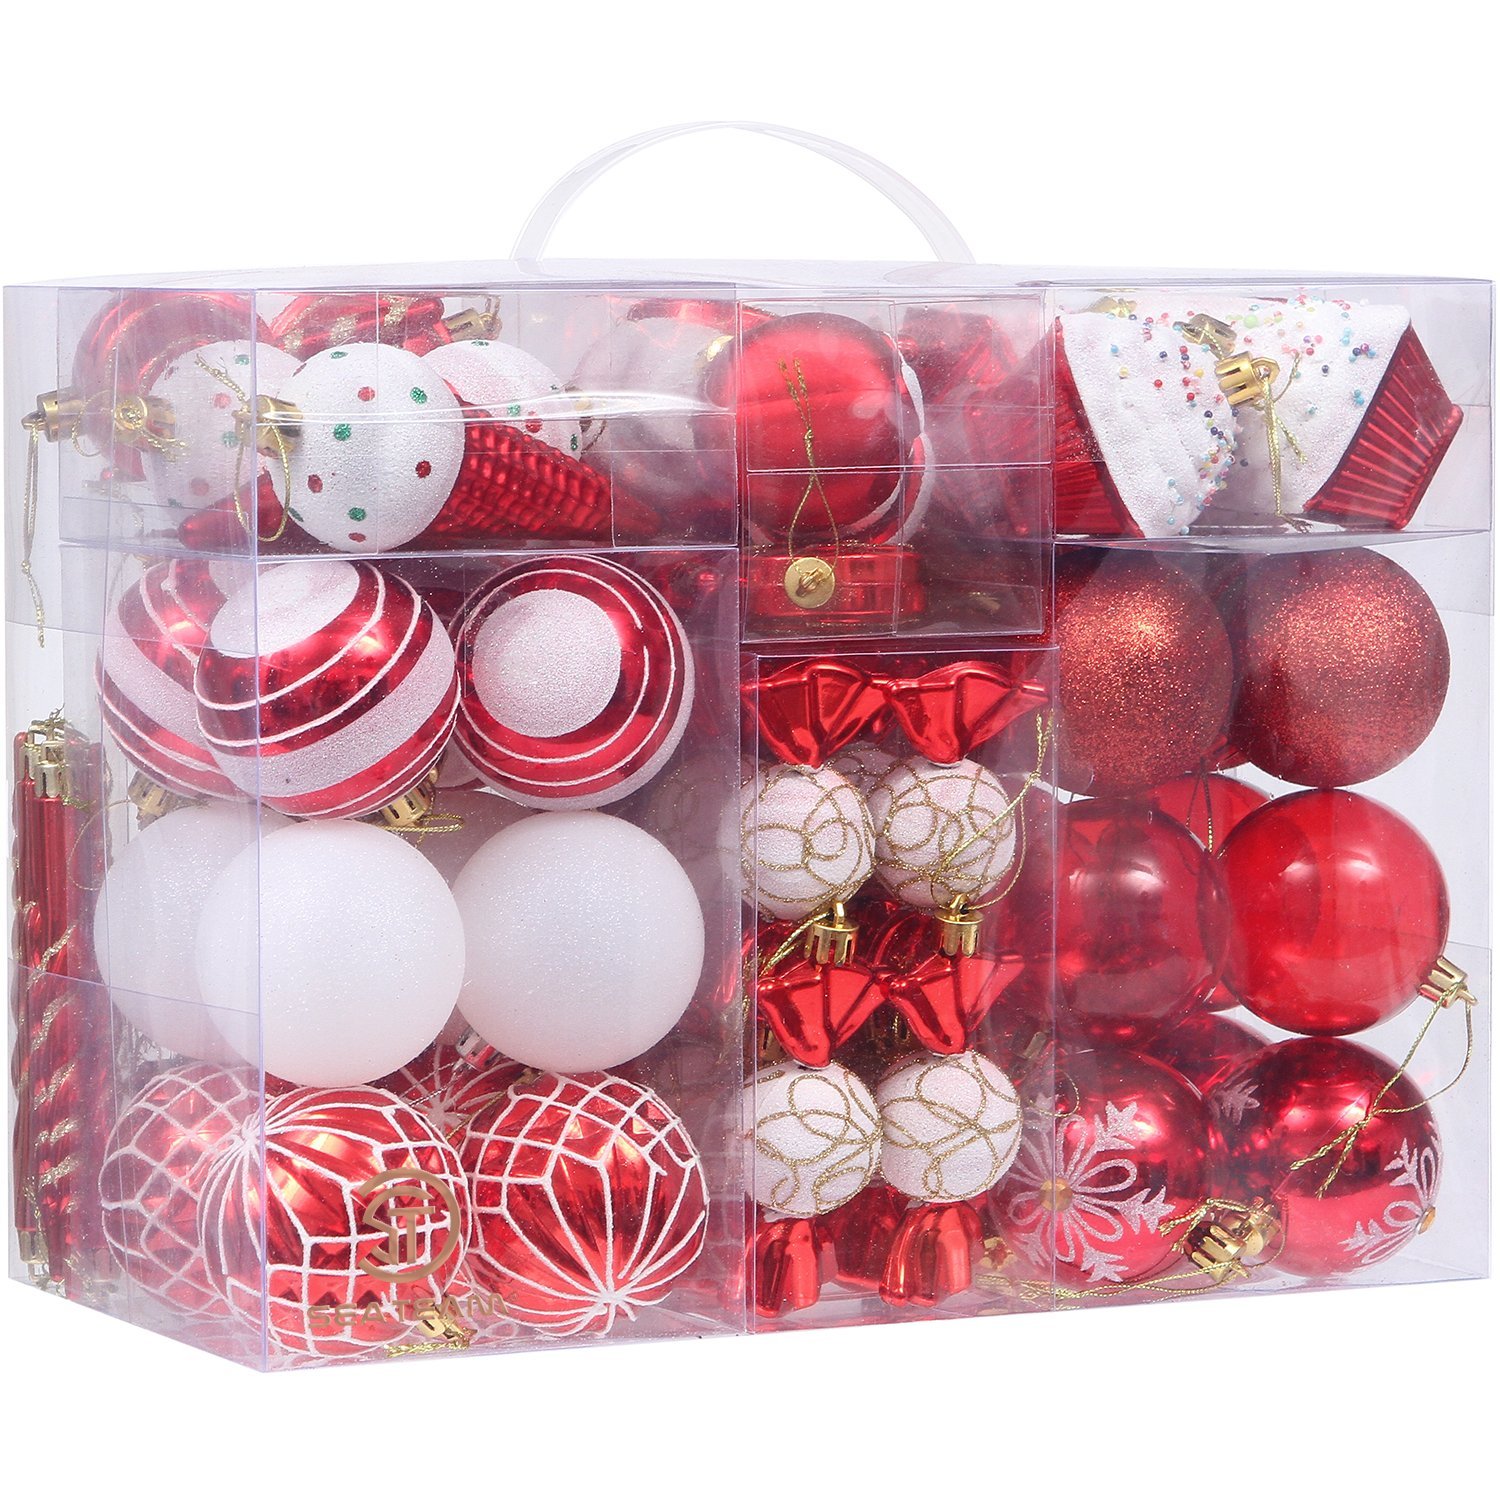 Assorted Shatterproof Christmas Ball Ornaments Set Decorative Baubles